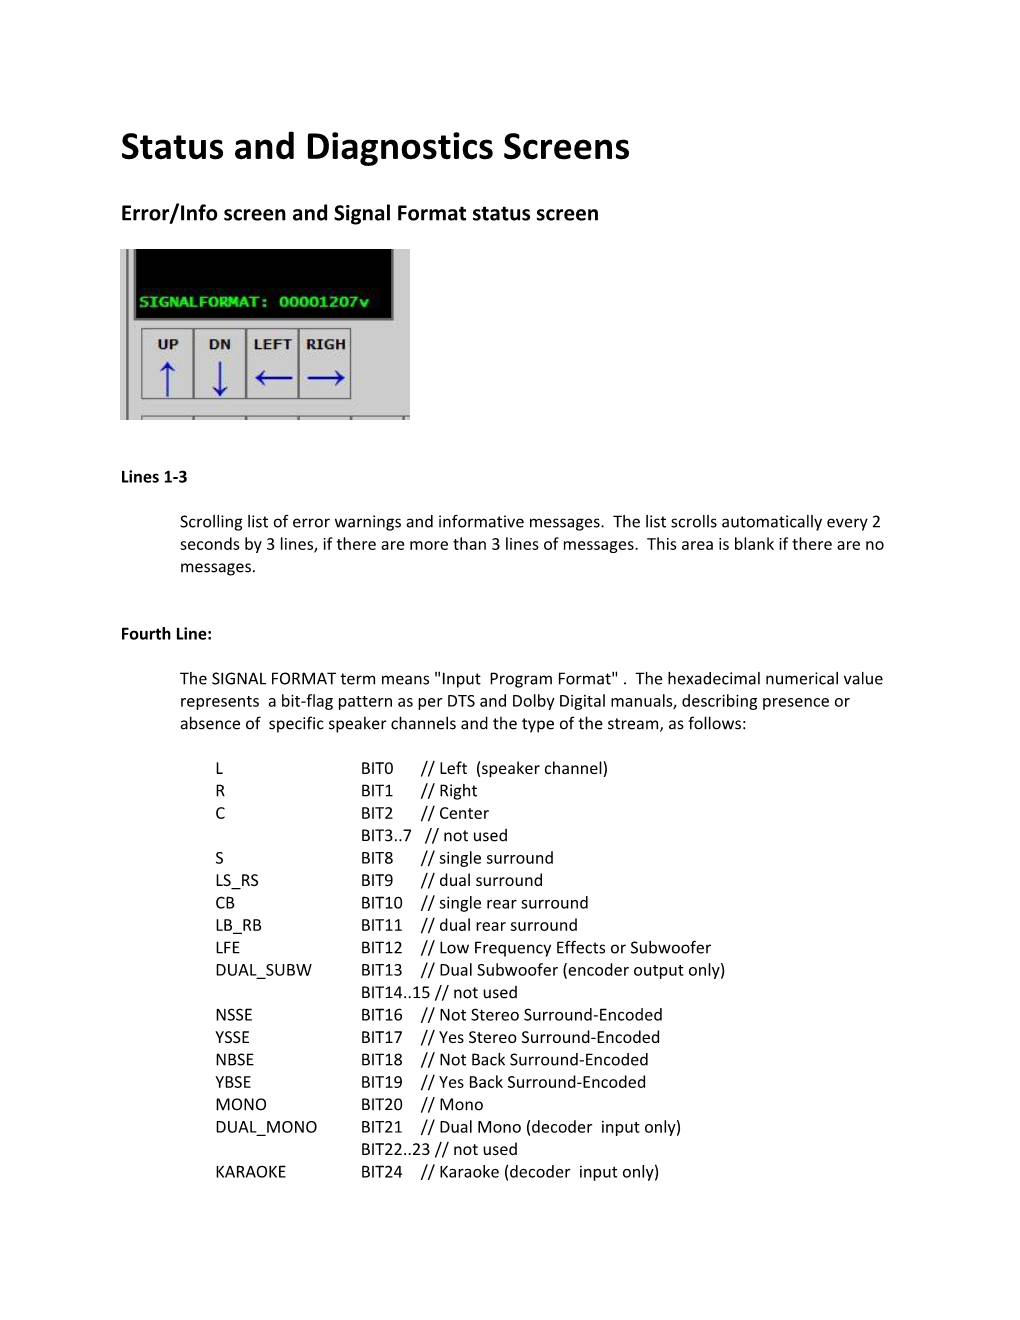 Error/Info Screen and Signal Format Status Screen